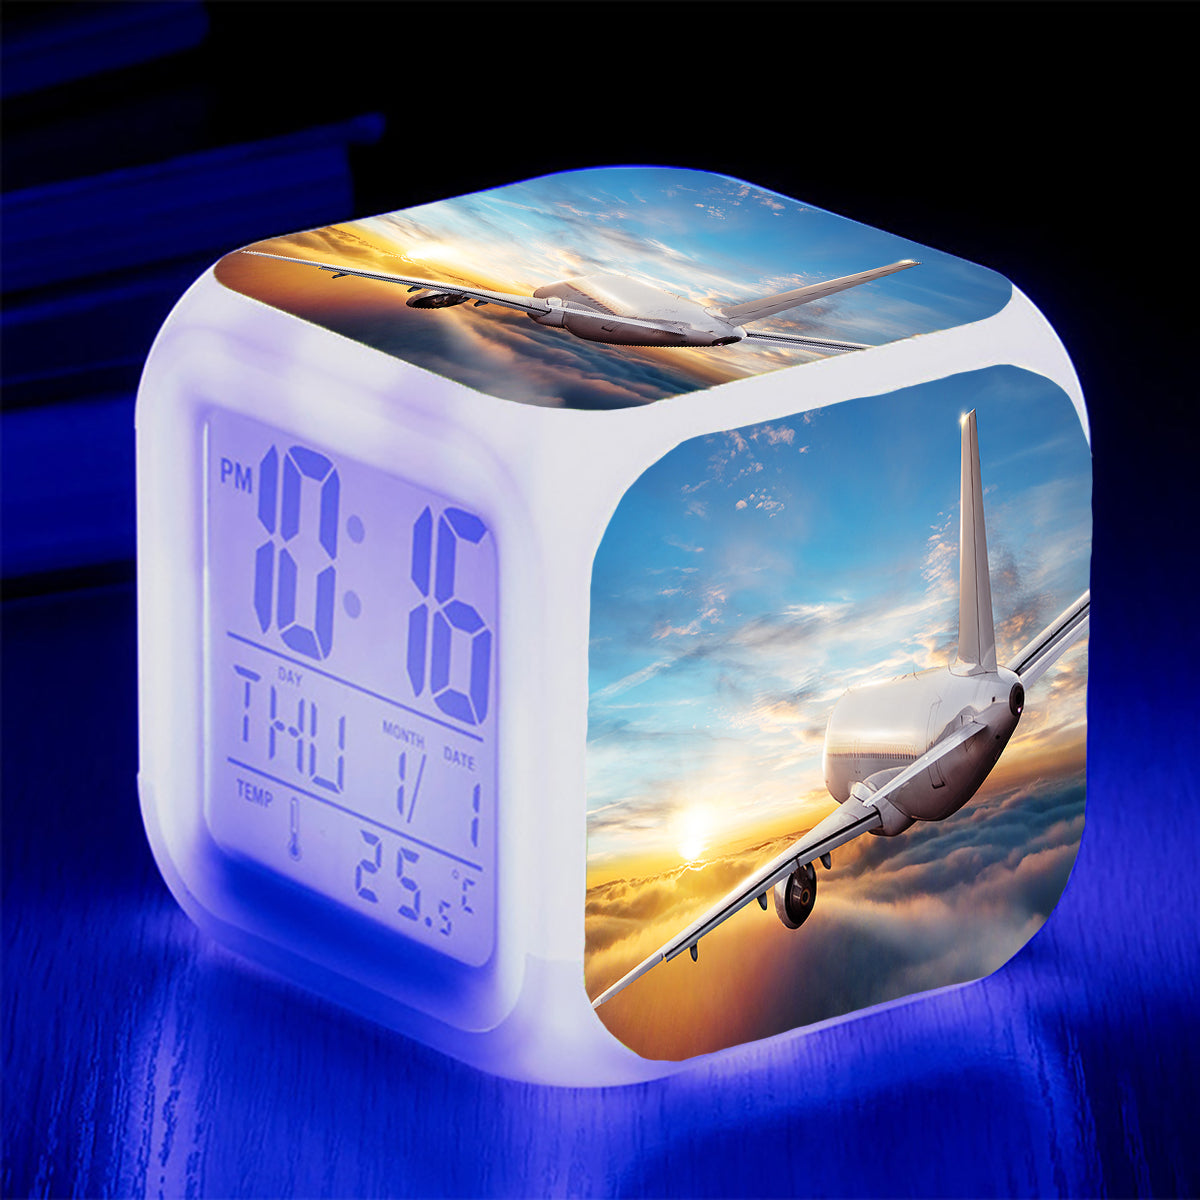 Airliner Jet Cruising over Clouds Designed "7 Colour" Digital Alarm Clock